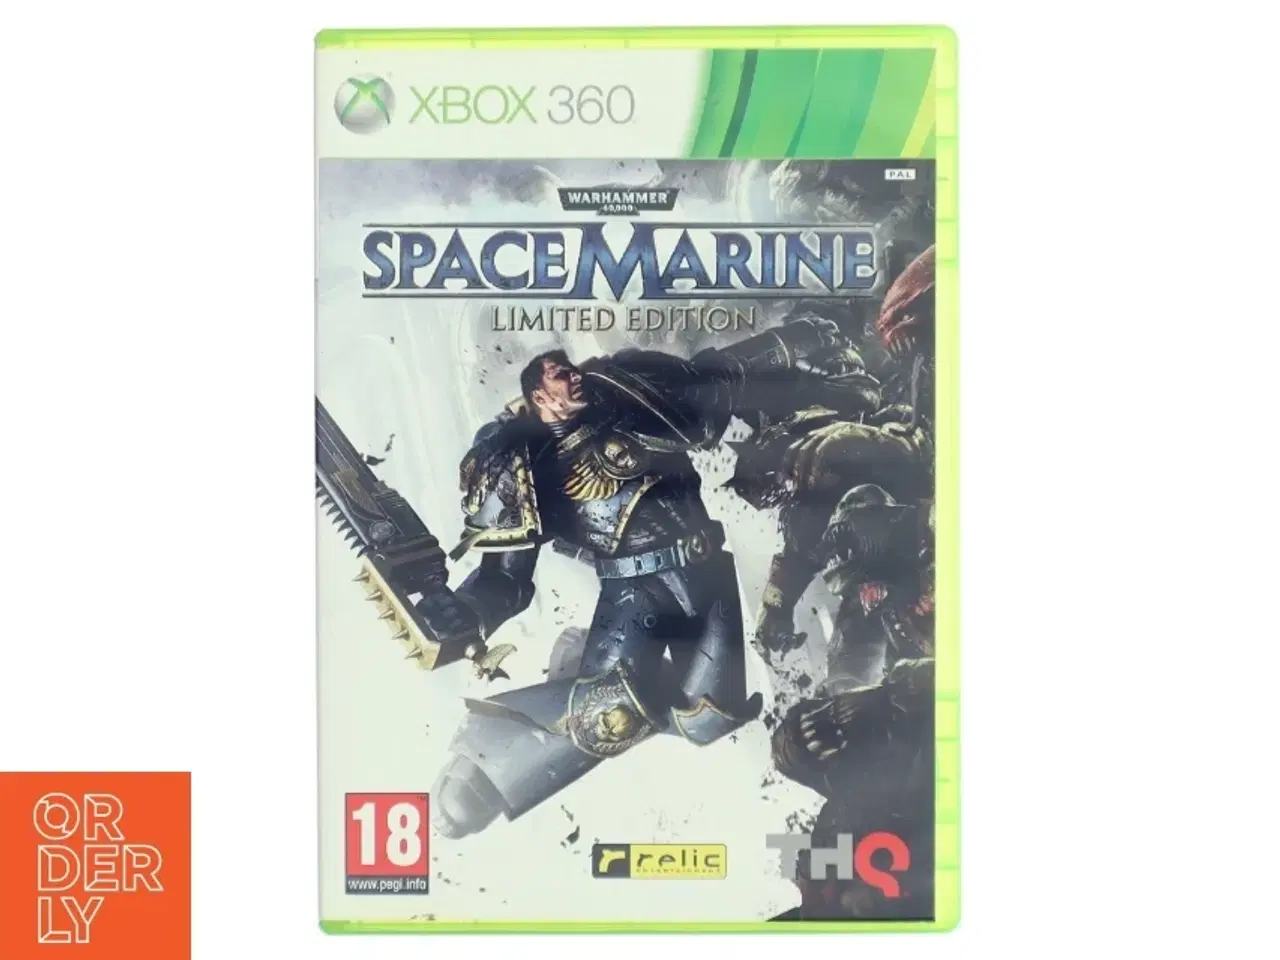 Billede 1 - Warhammer 40,000: Space Marine Limited Edition til Xbox 360 fra THQ